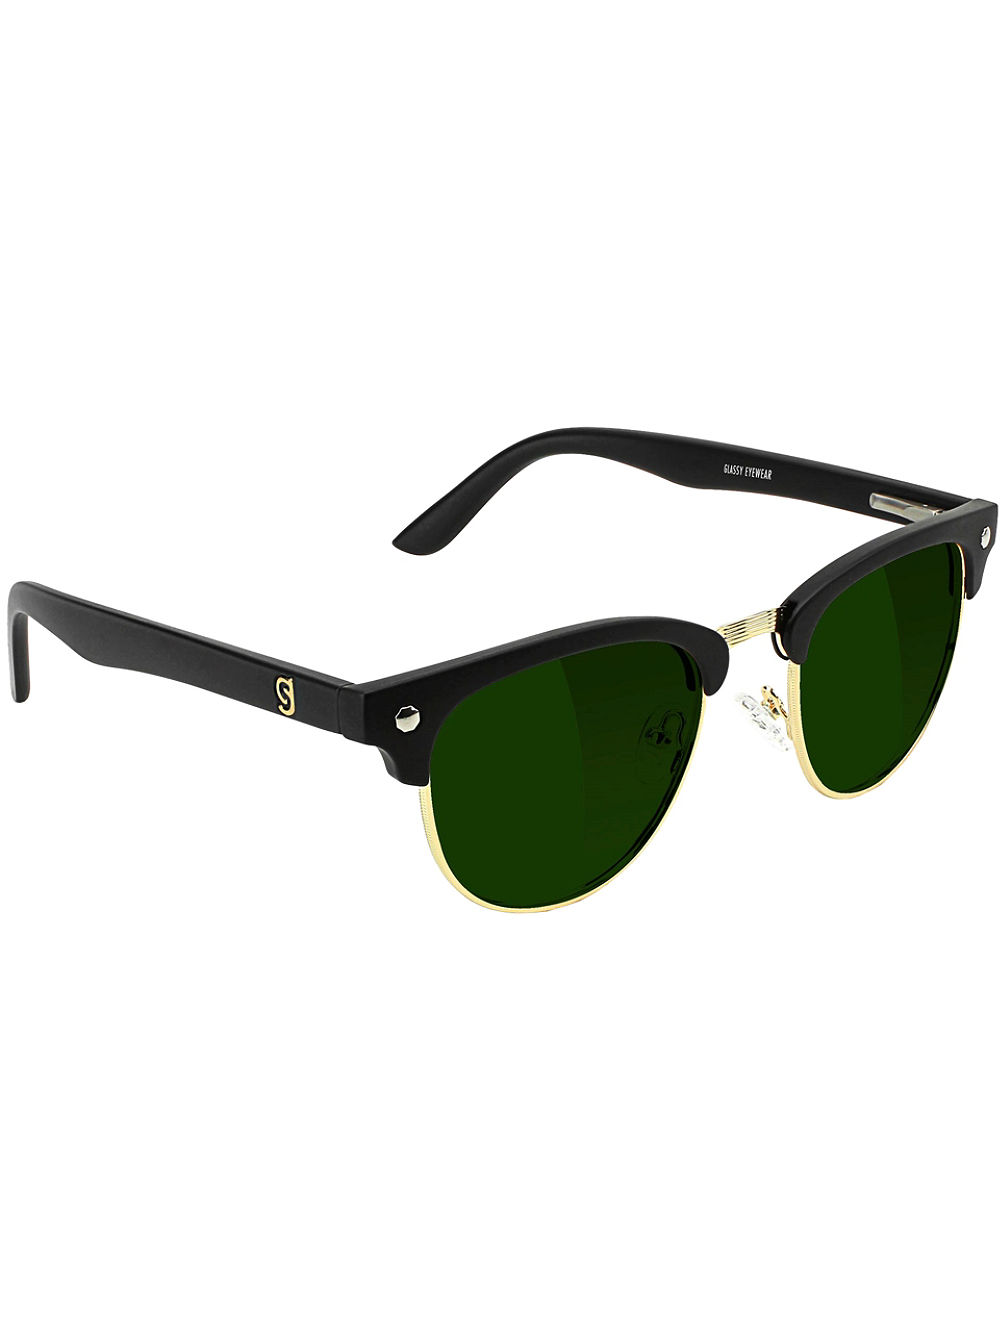 Morrison Premium Polarized Black/Green L Aurinkolasit